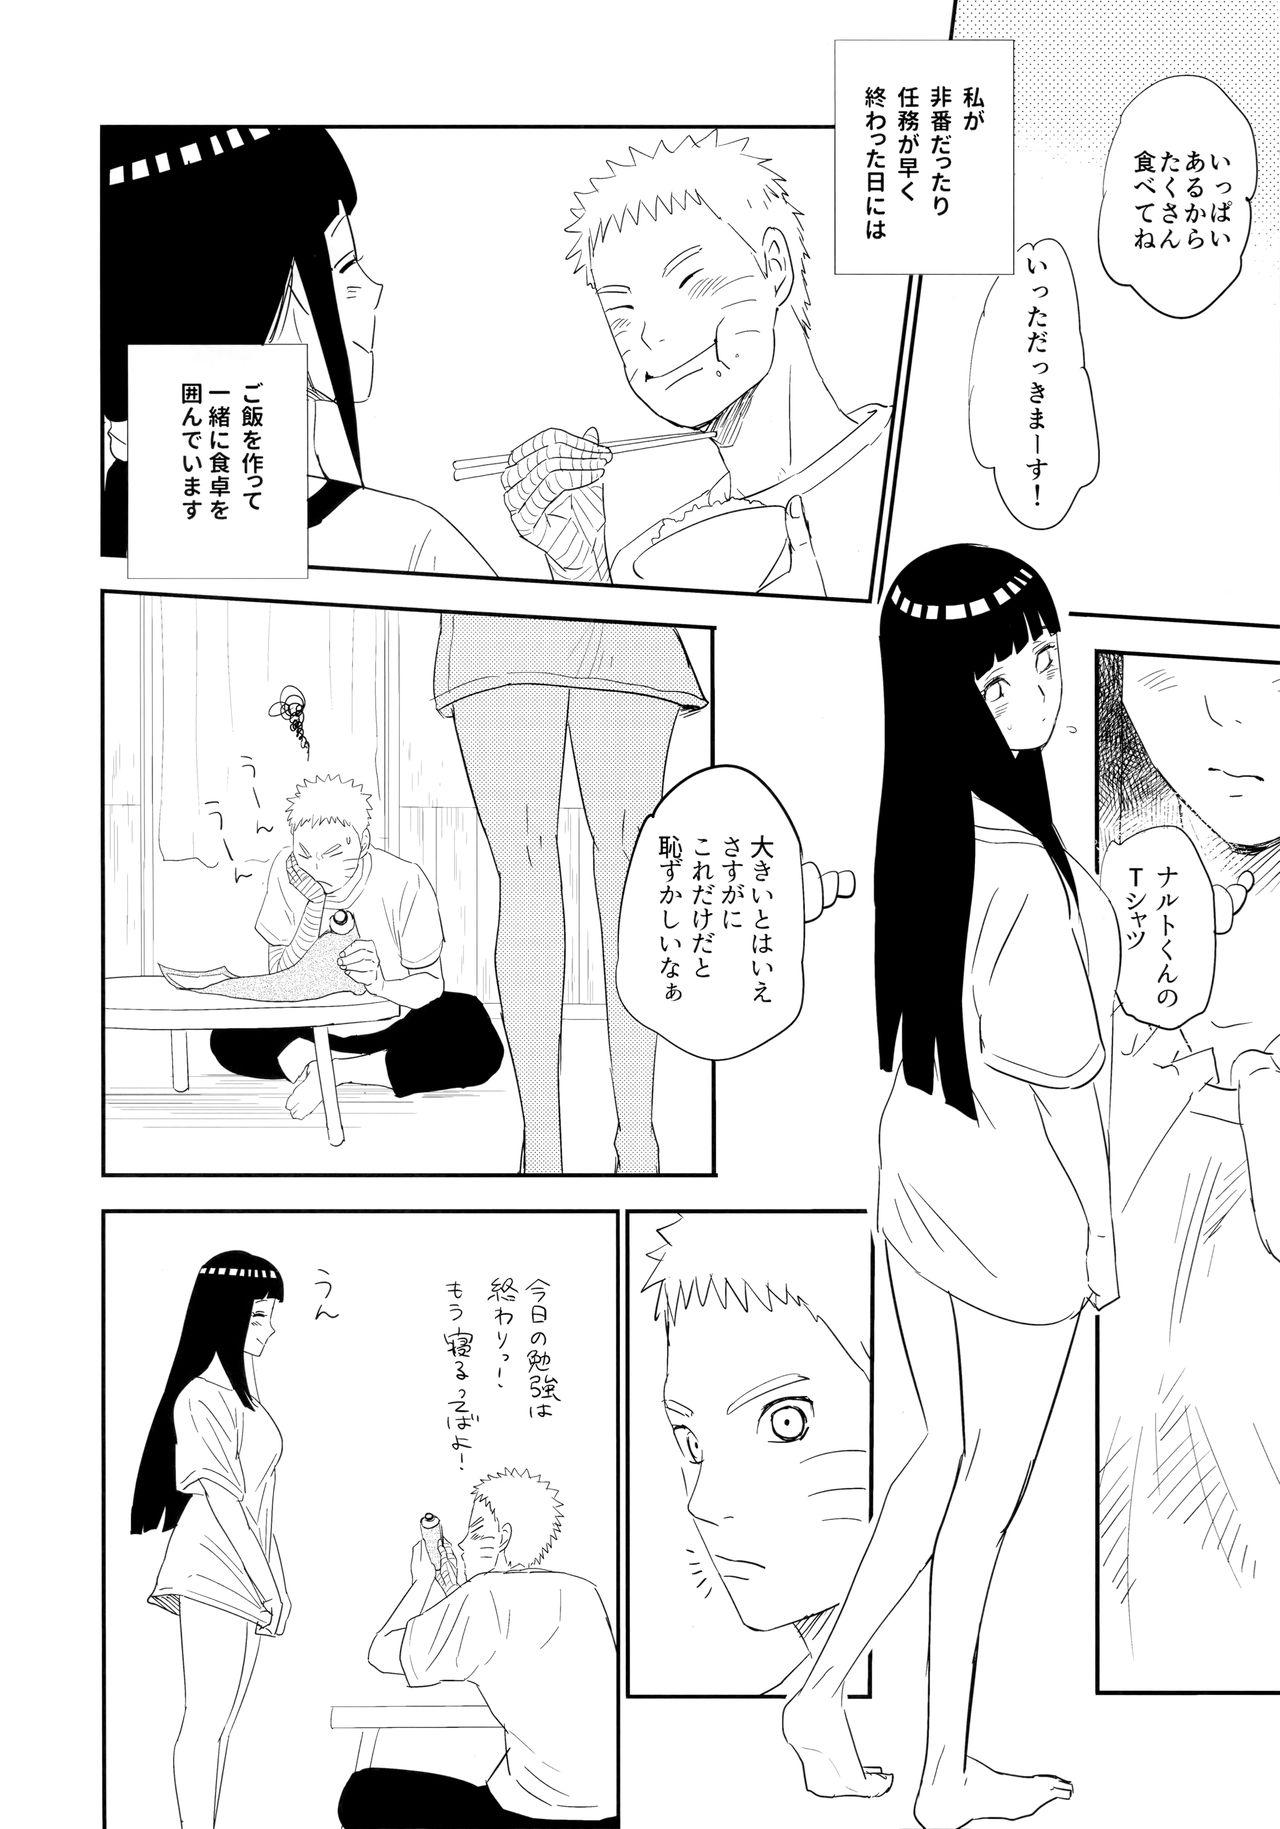 Transexual PRESENT - Naruto Girlnextdoor - Page 5